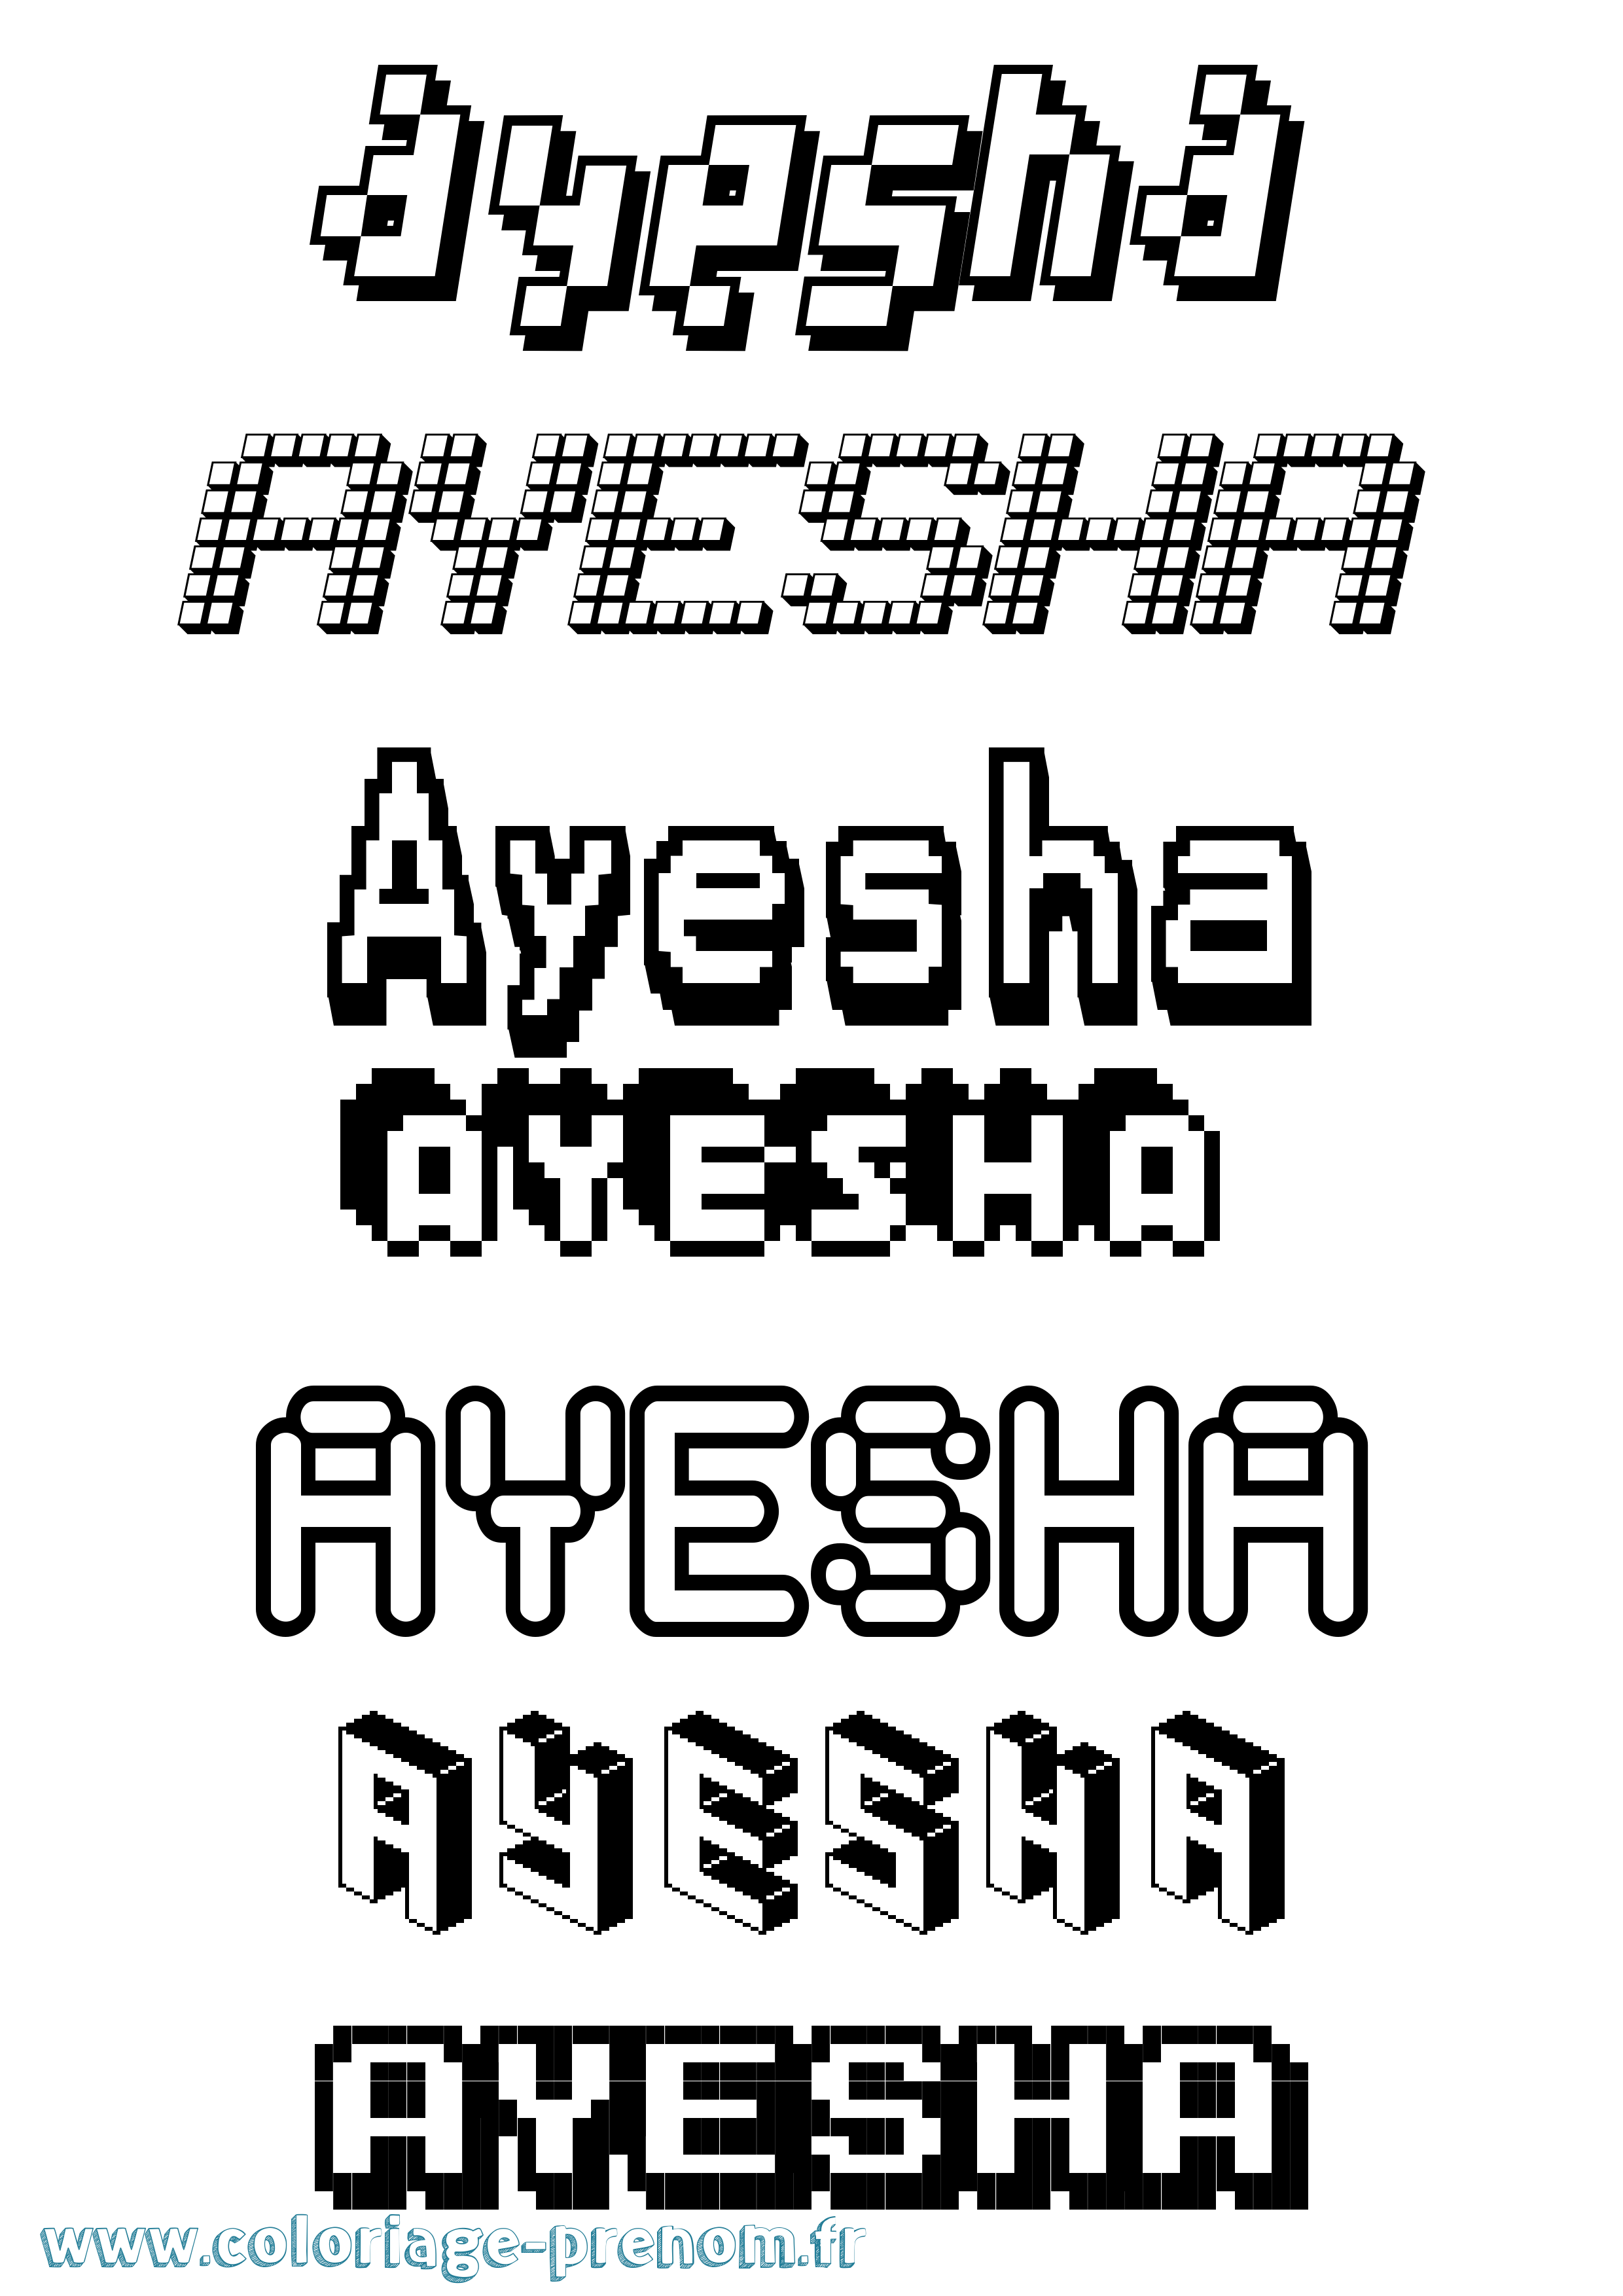 Coloriage prénom Ayesha Pixel